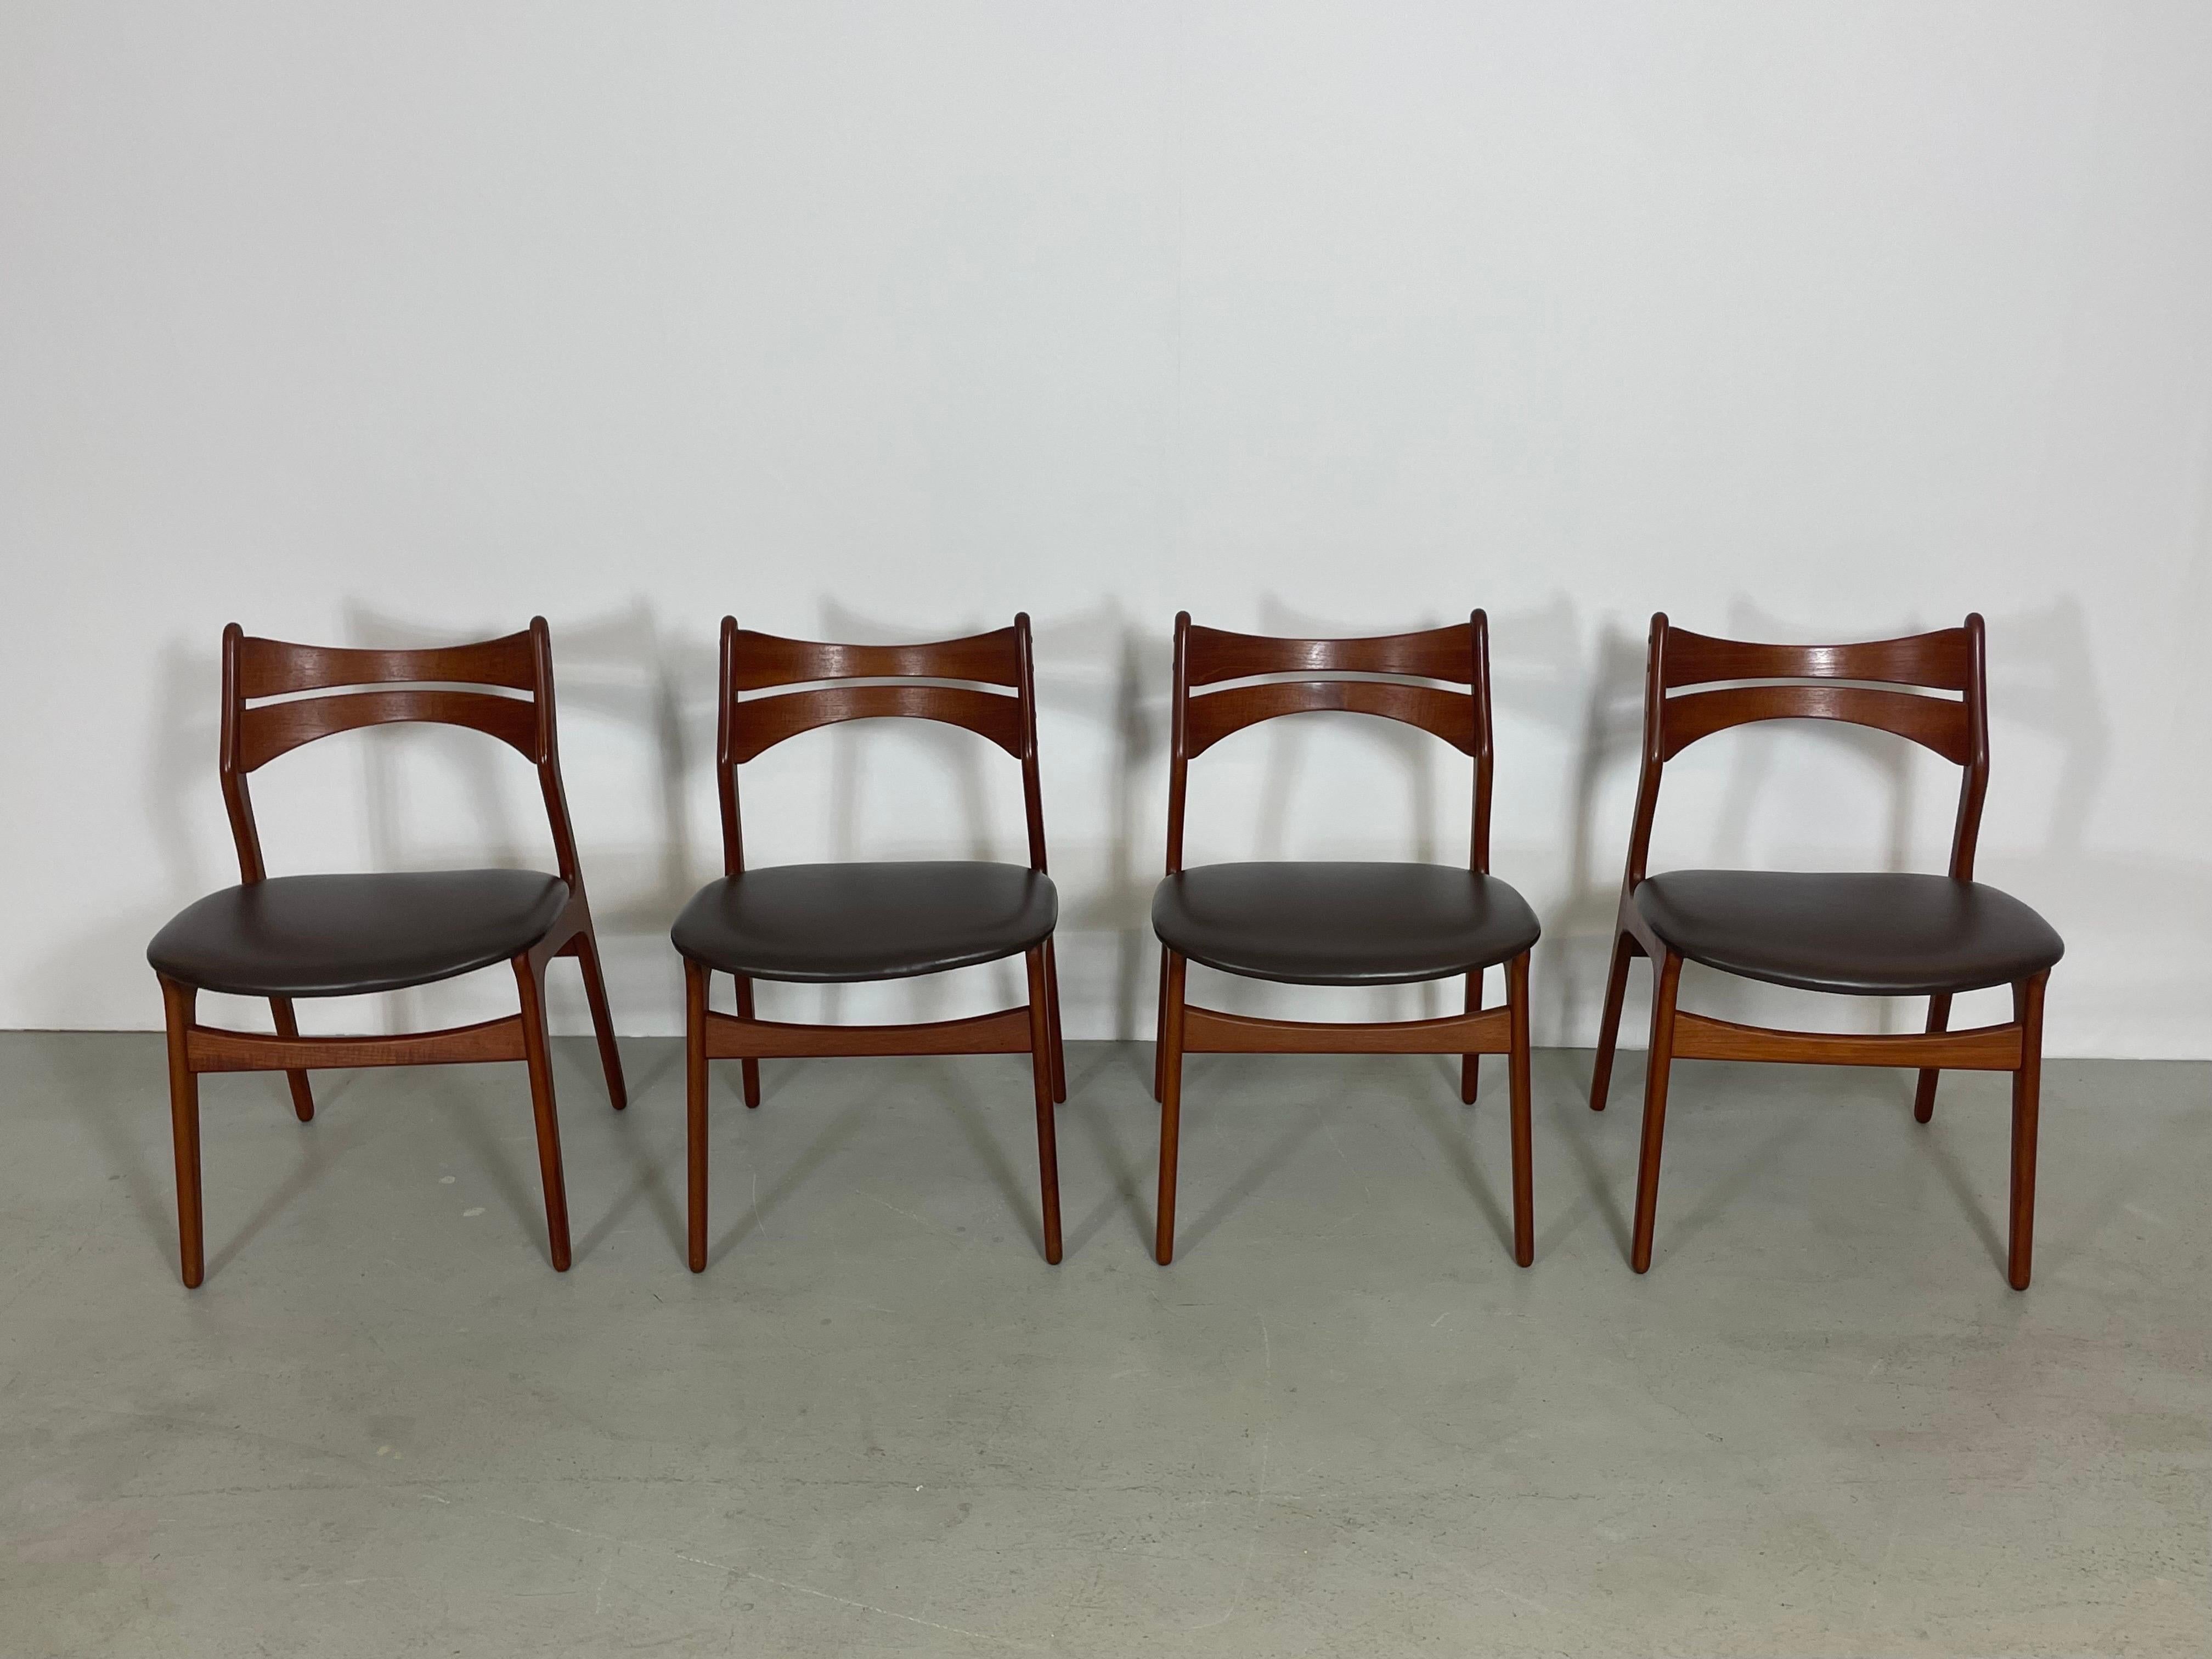 Skandinavian Teak Dining Chairs by Erik Buch, Denmark 1950s For Sale 5